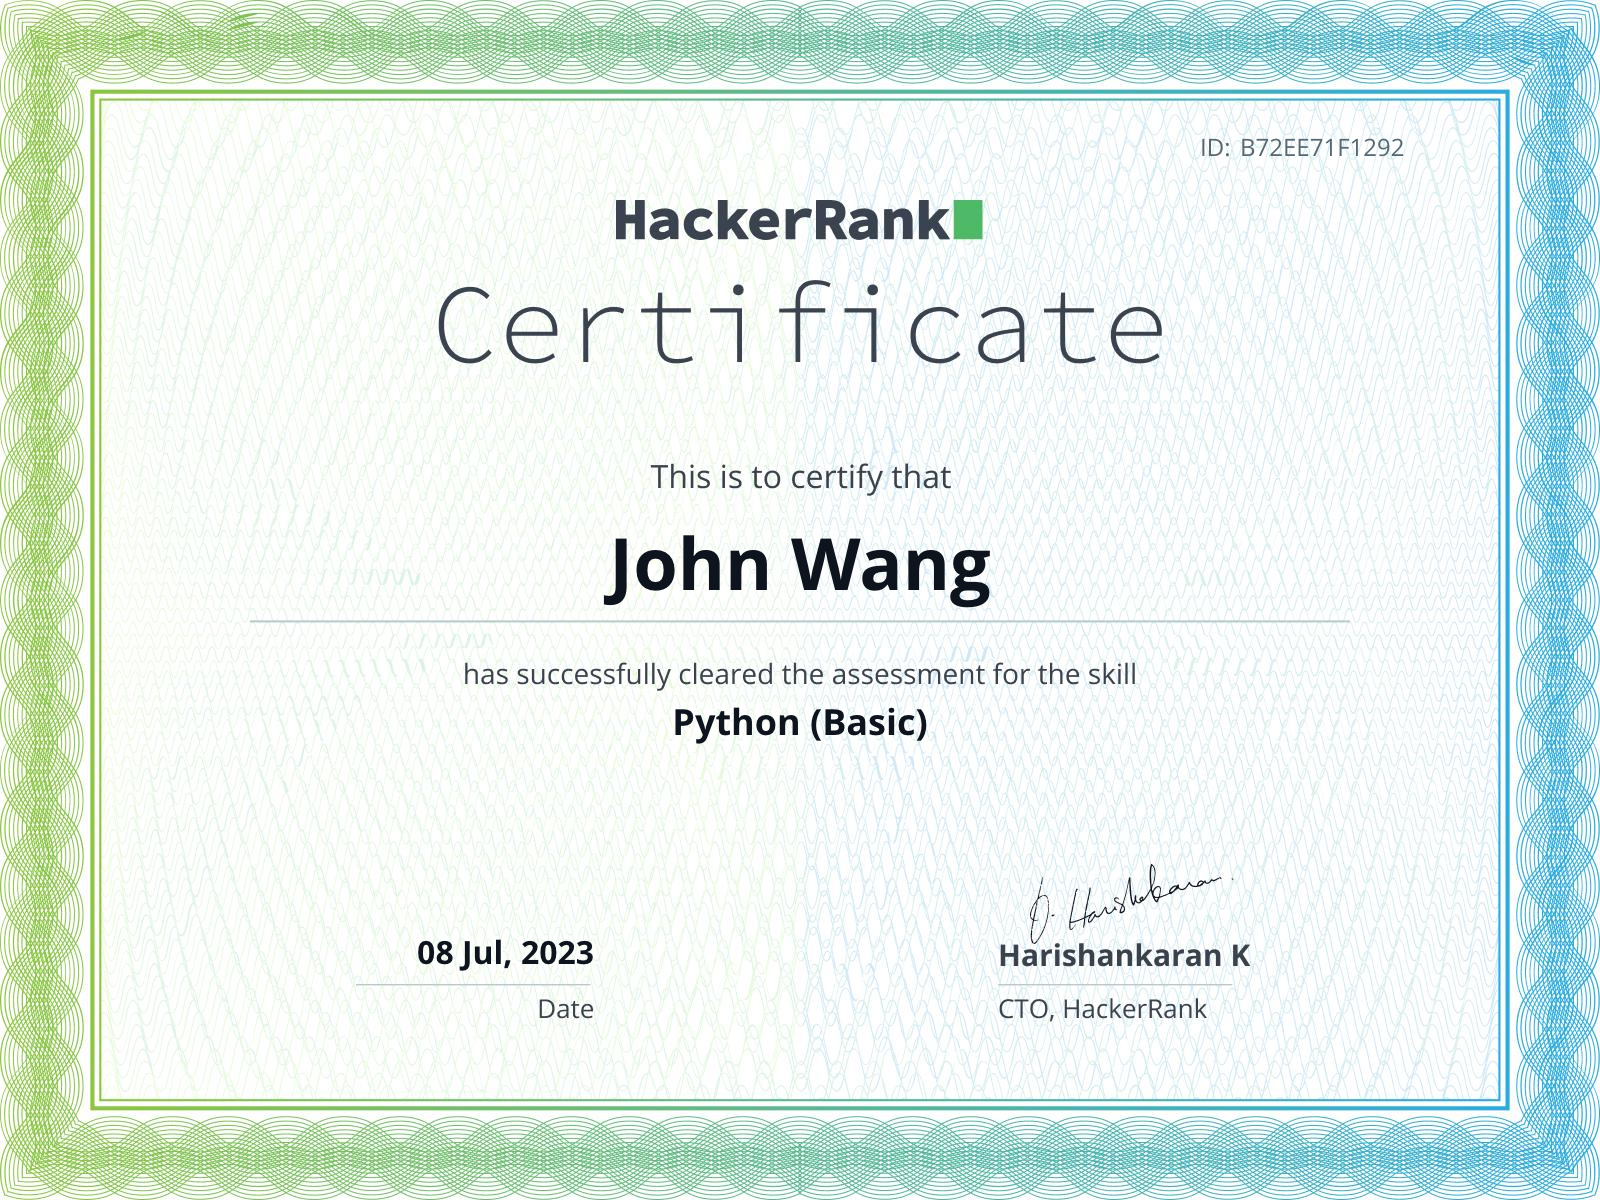 John's Python (Basic) from HackerRank